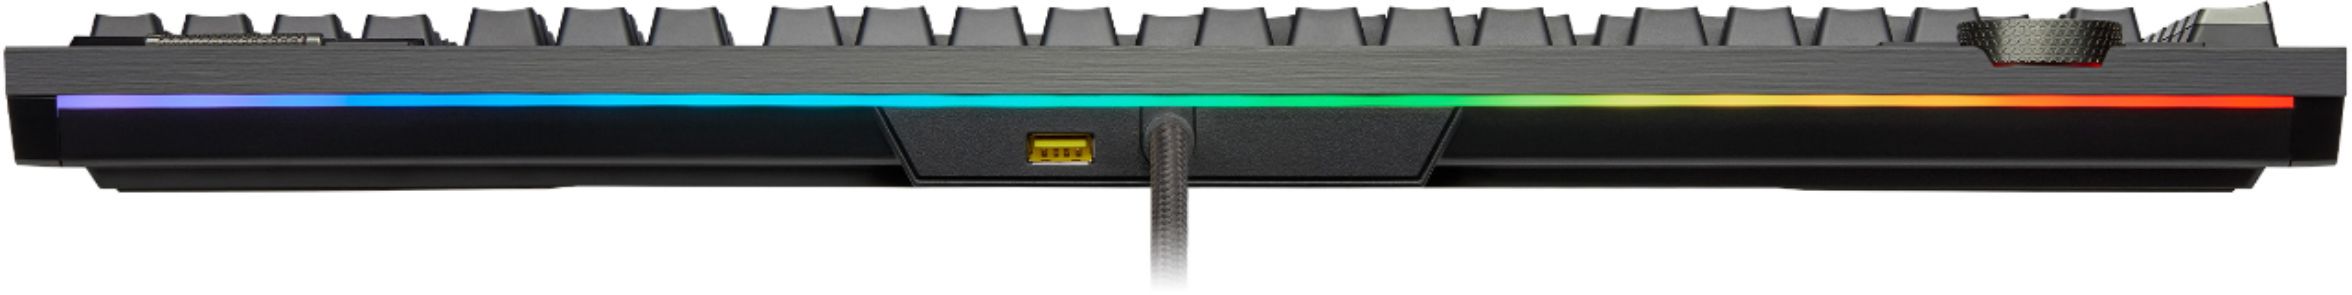 TECLADO CORSAIR MECANICO K100 RGB WIRED CHERRY MX SPEED BLACK USB